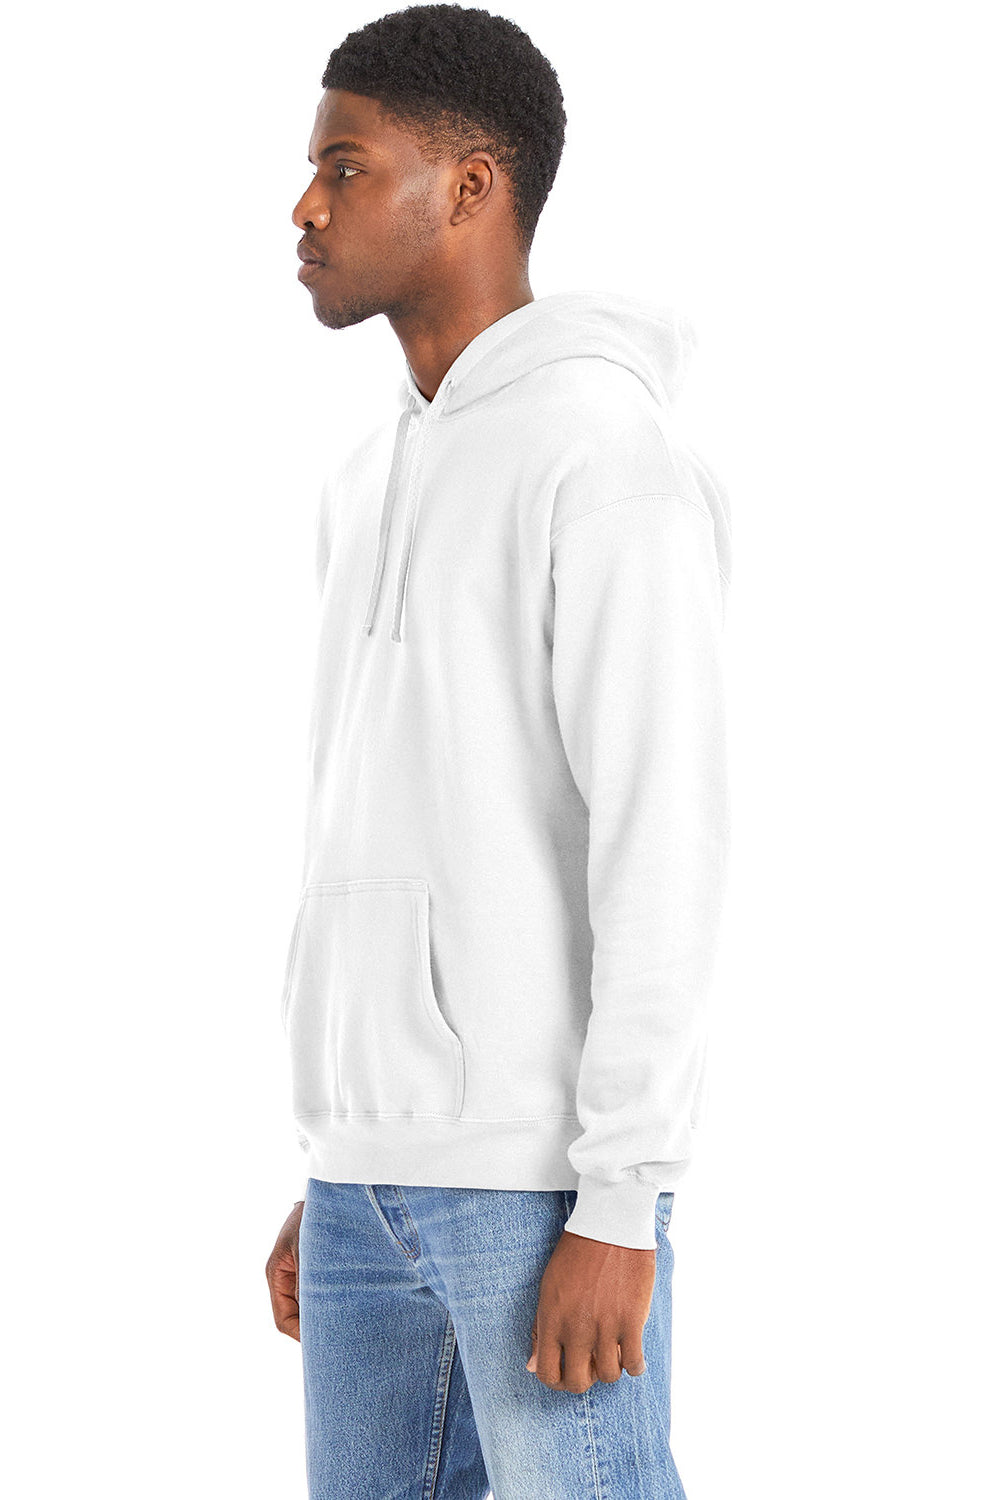 Hanes RS170 Mens Perfect Sweats Hooded Sweatshirt Hoodie White 3Q